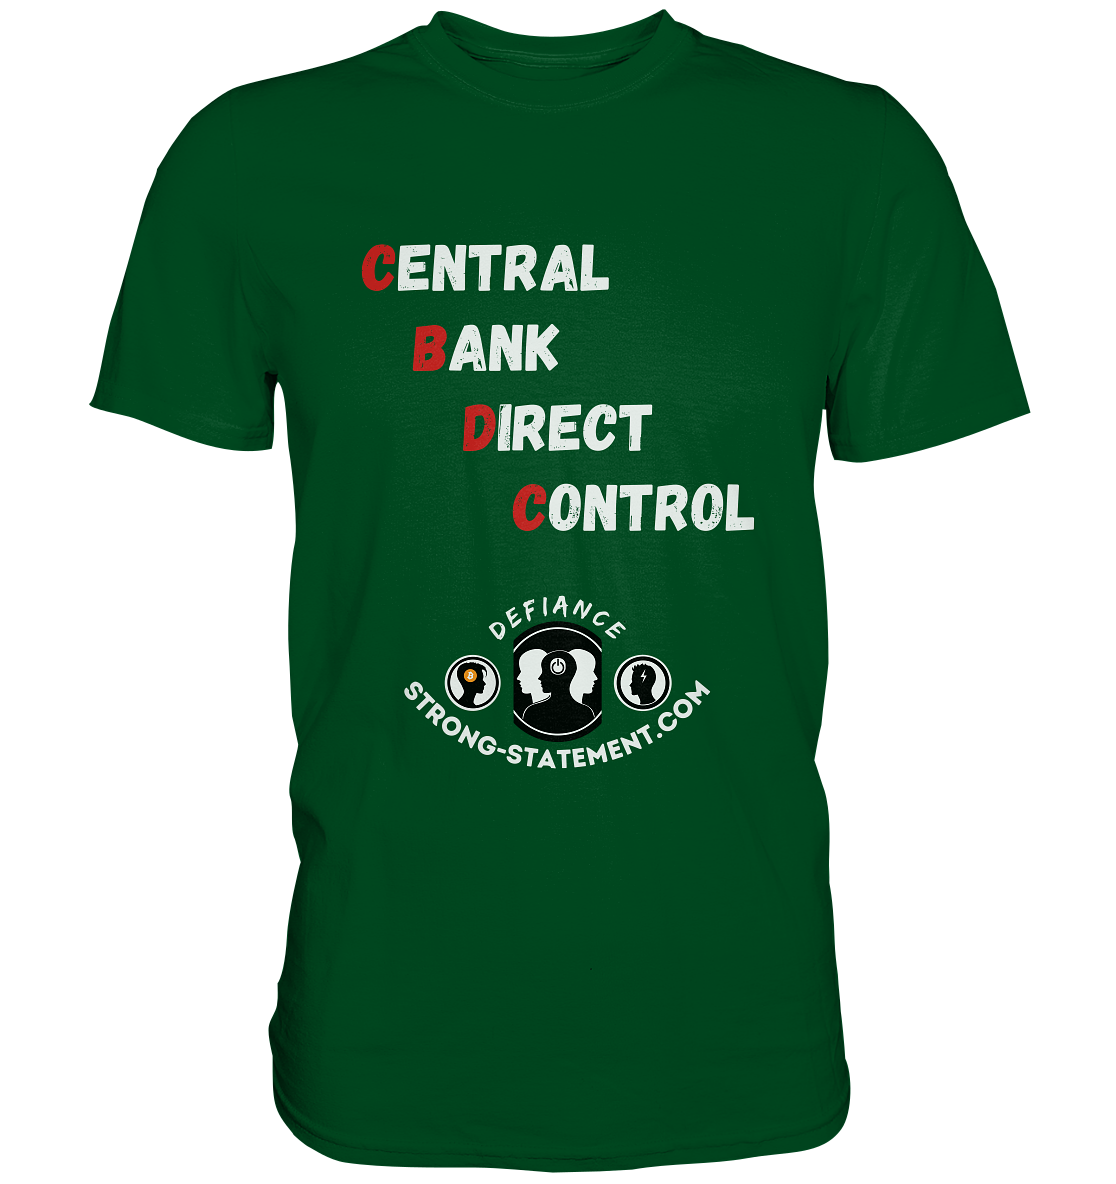 CENTRAL BANK DIRECT CONTROL -DEFIANCE -Strong-Statement.com (Ladies Collection 21% Rabatt bis zum Halving 2024)  - Premium Shirt